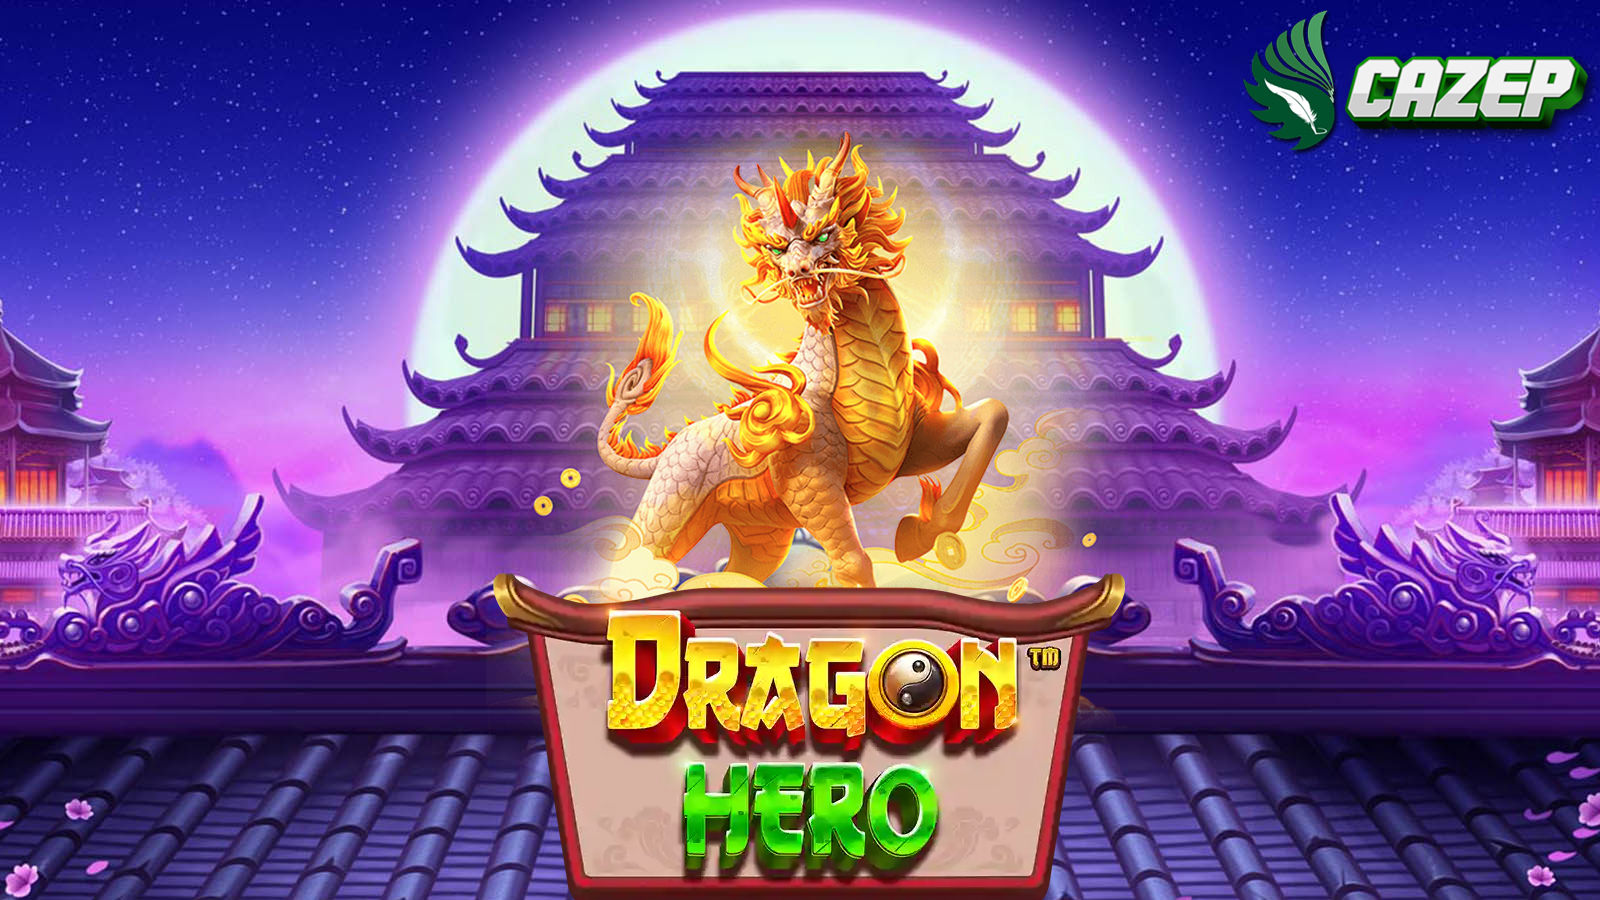 Dragon Hero Pragmatic